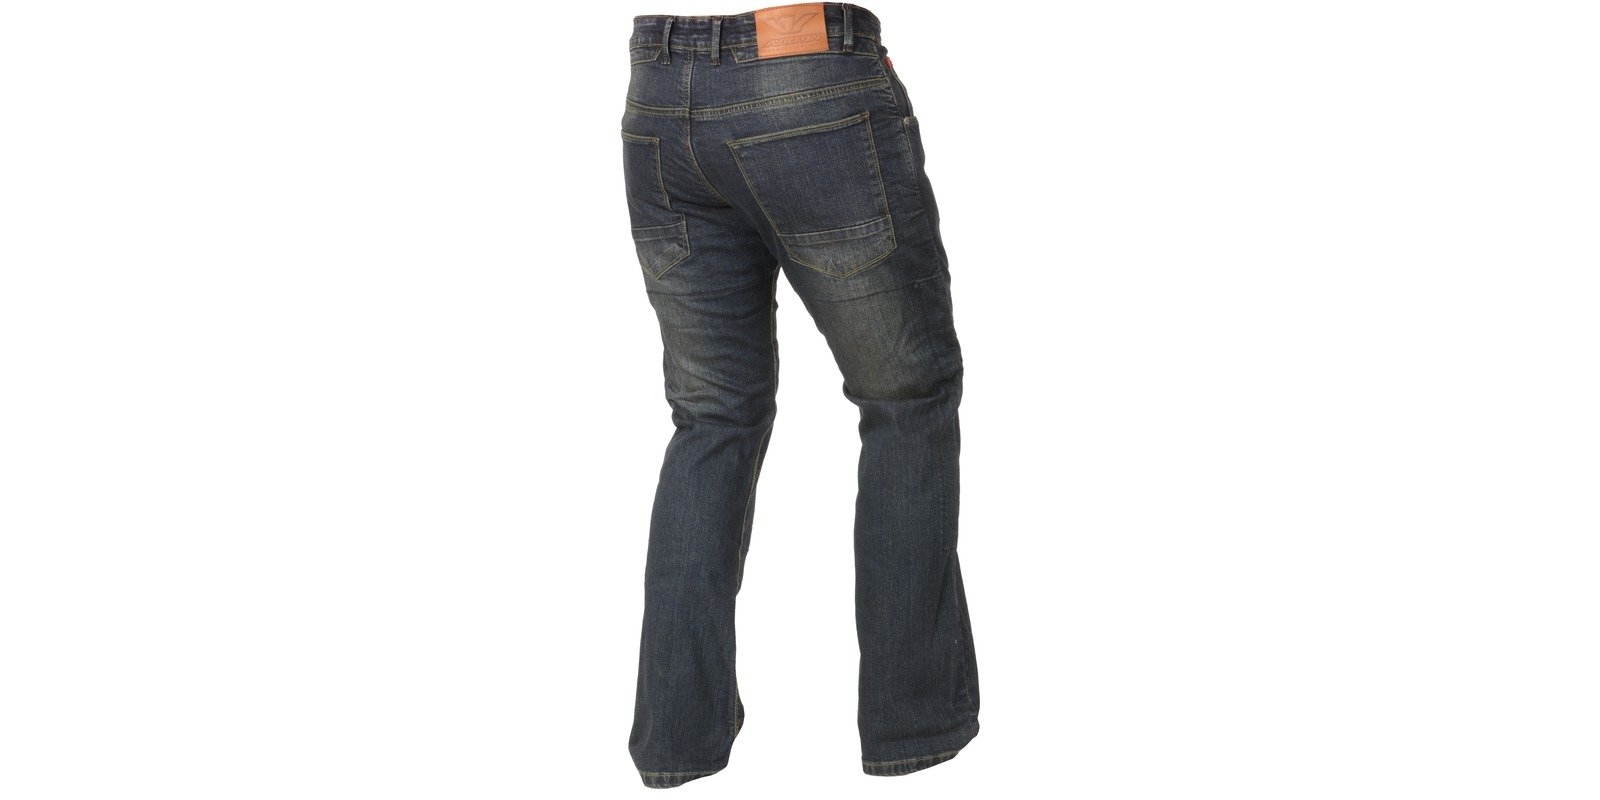 Obrázek produktu kalhoty, jeansy Brooklyn, AYRTON (modré) nemá